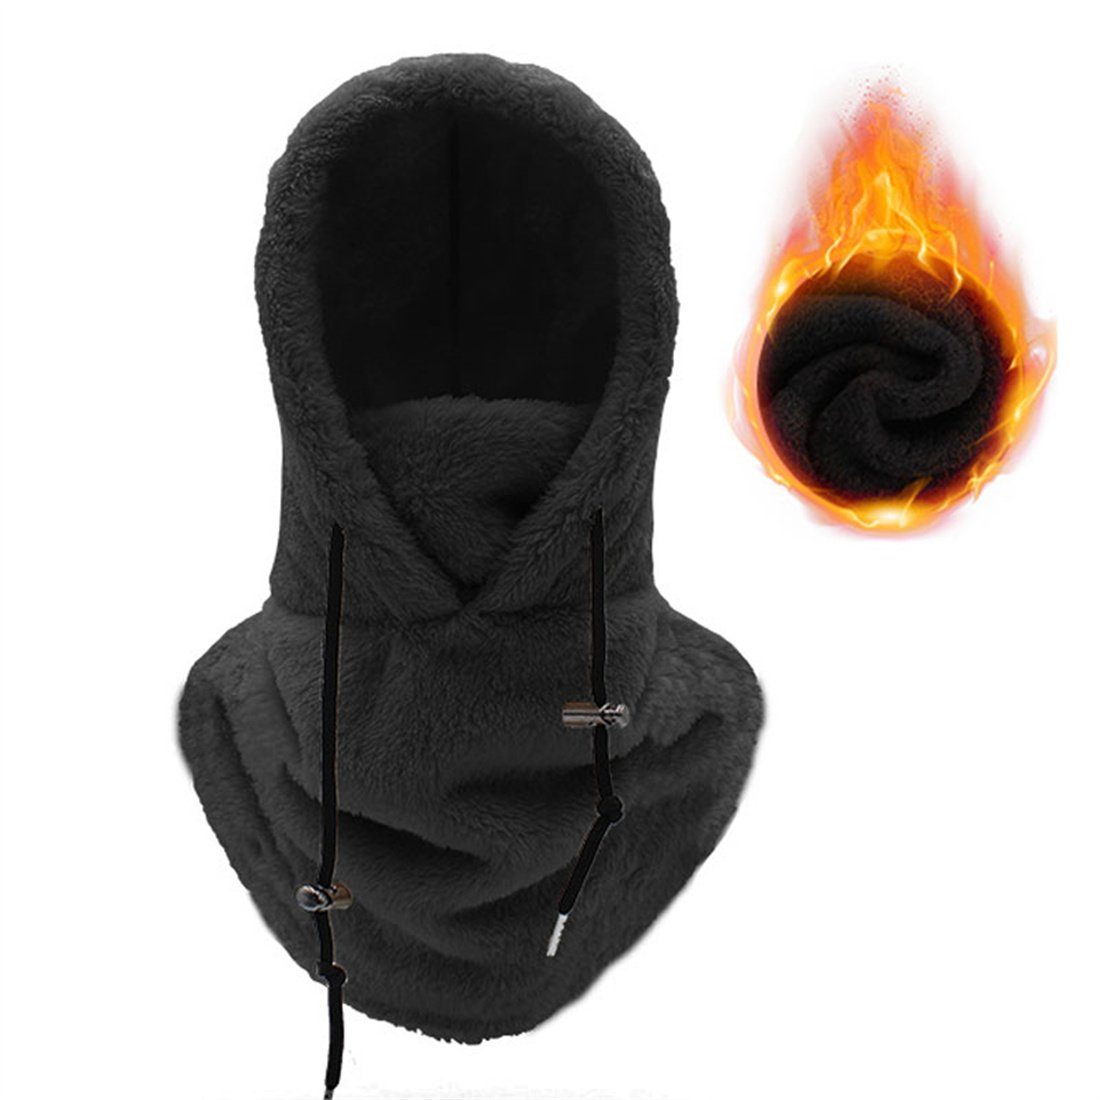 Winter DÖRÖY Sturmhaube Warme Windproof Schwarz Maske,Multifunktionale Kopfbedeckung Ski Reiten